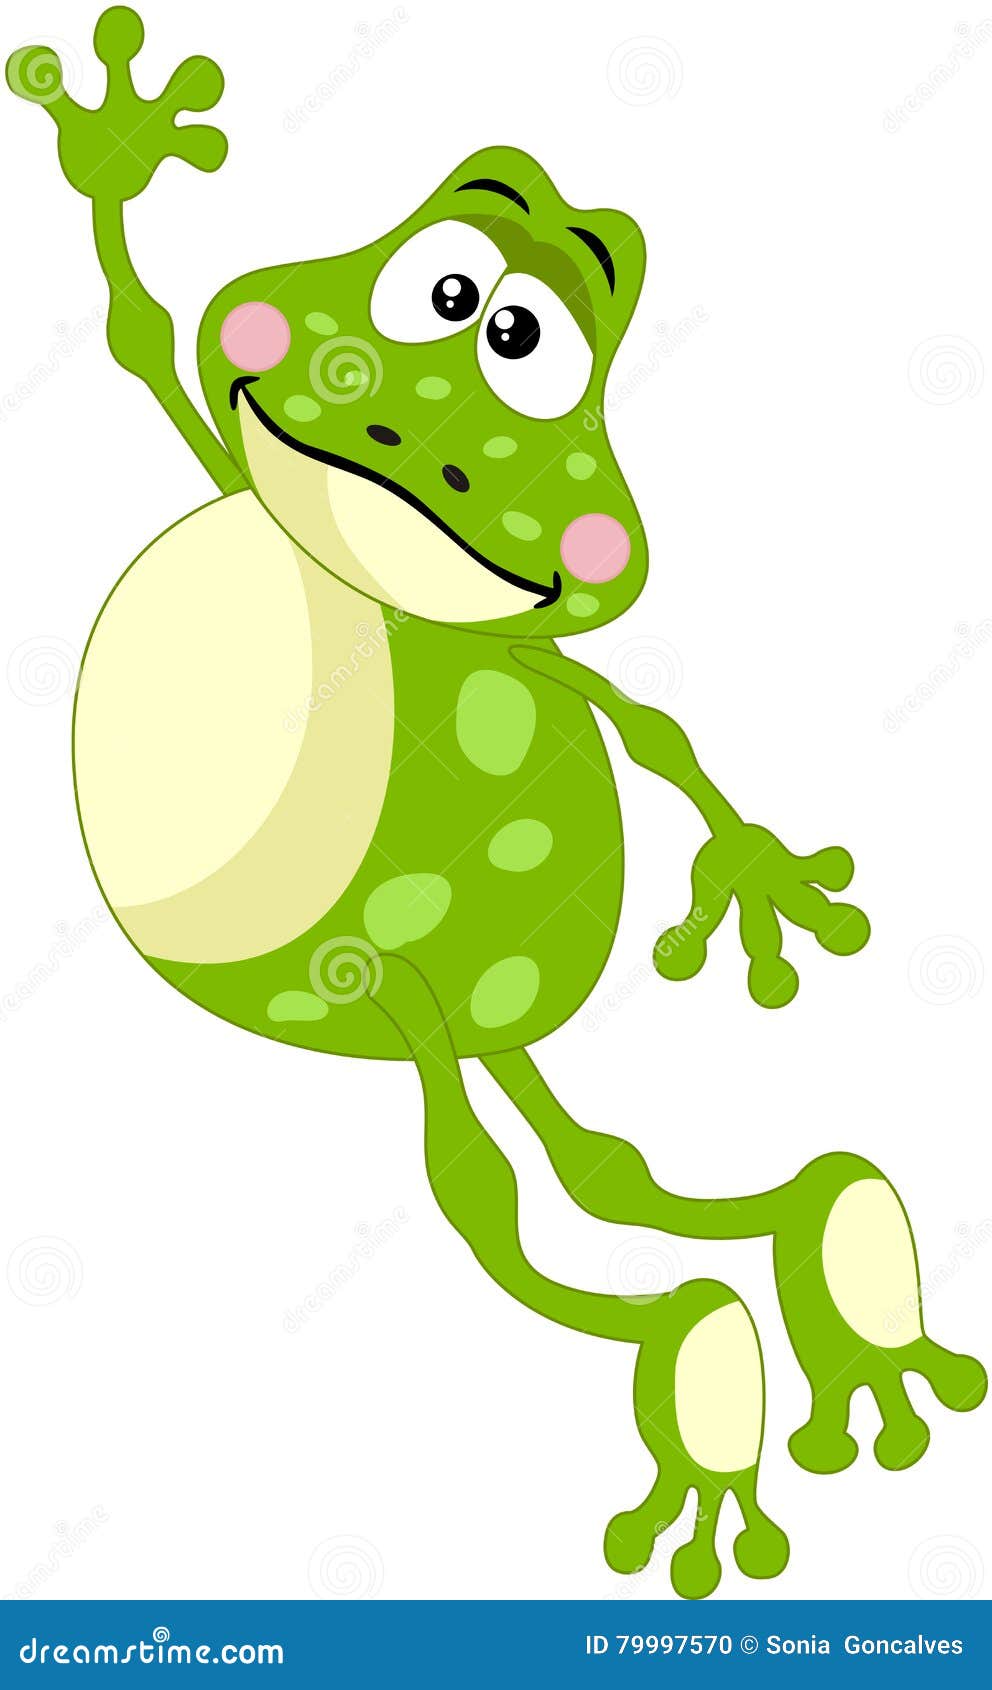 Cute frog jumping stock vector. Illustration of scrapbook - 79997570